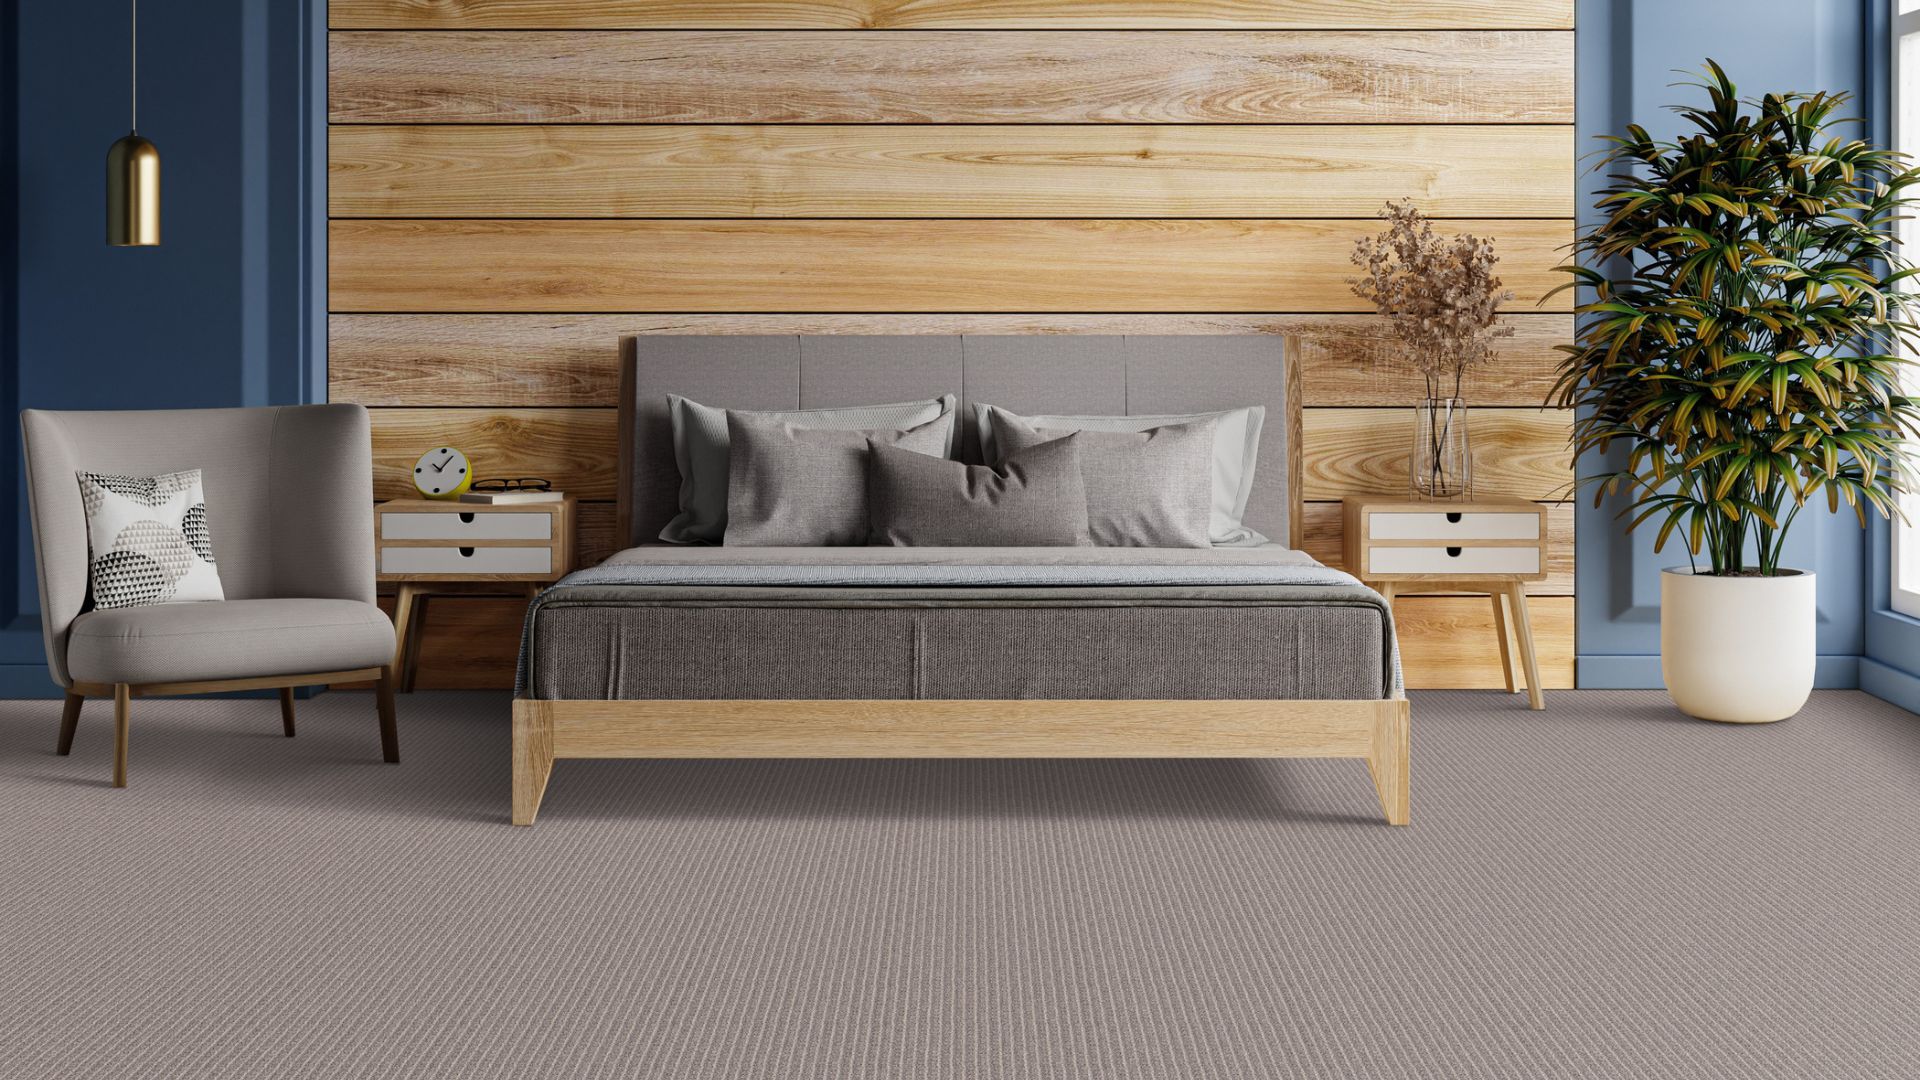 Carpet in a bedroom.